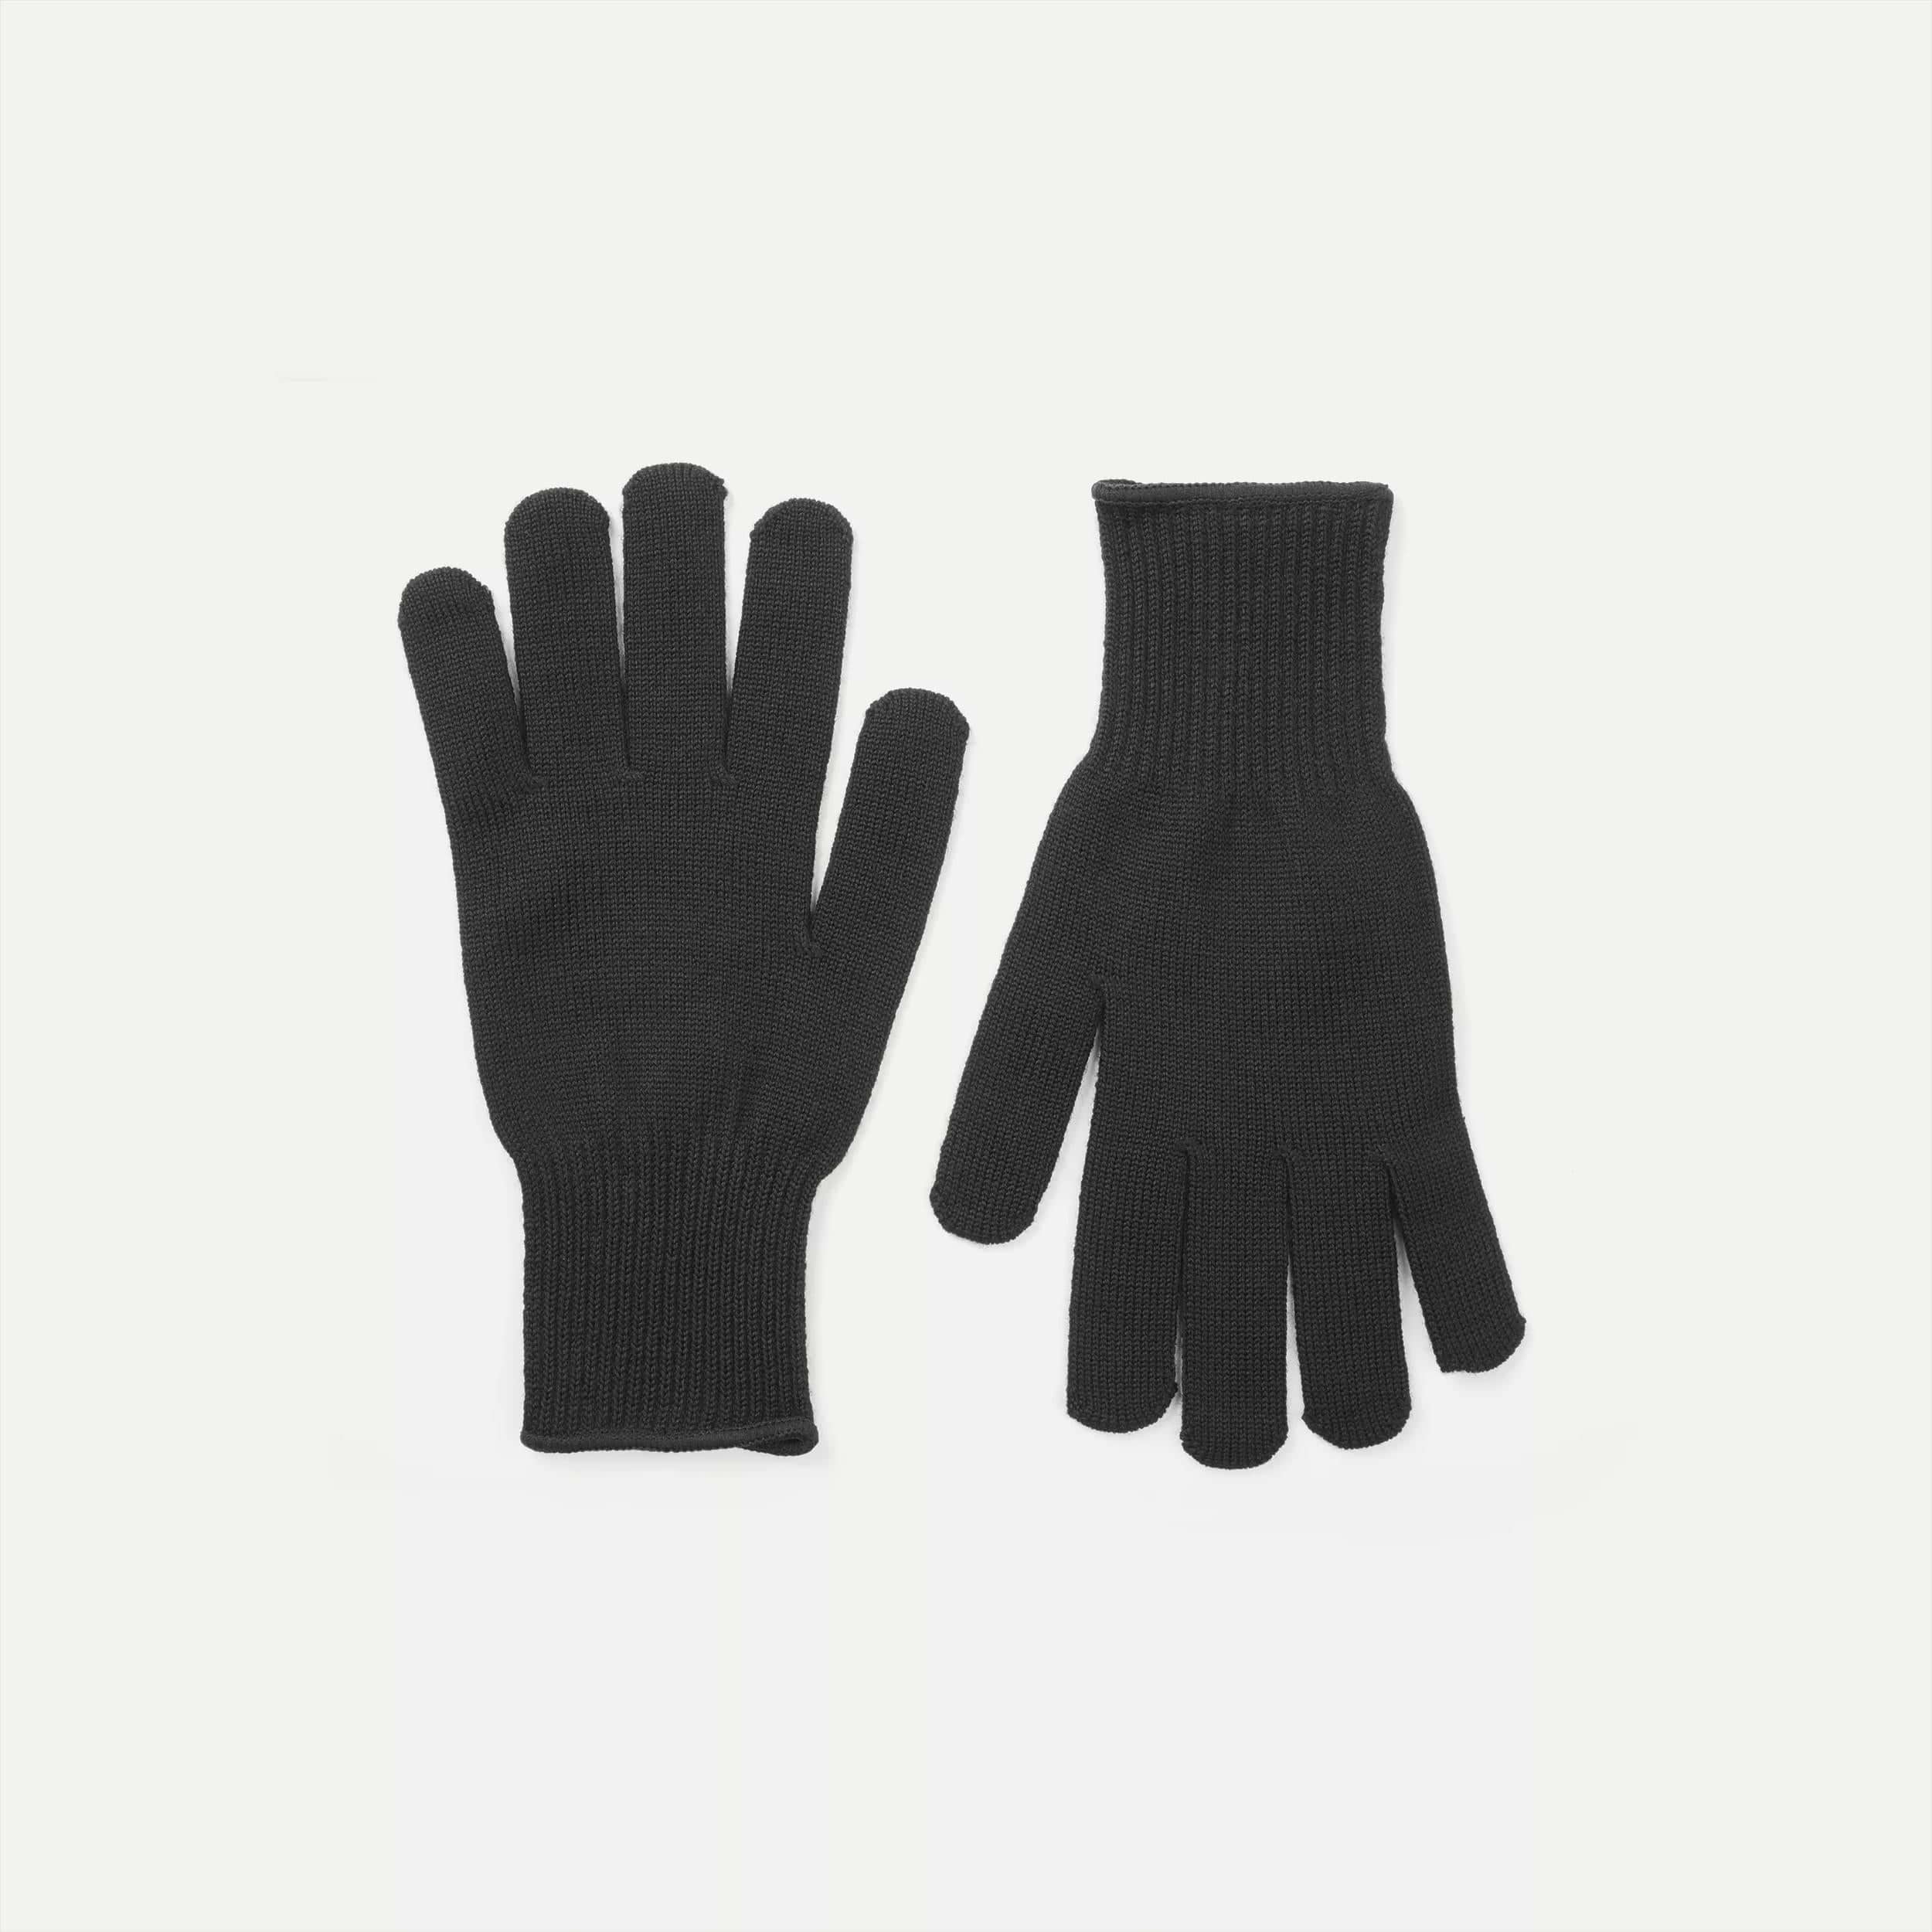 Stody - Solo Merino Liner Glove